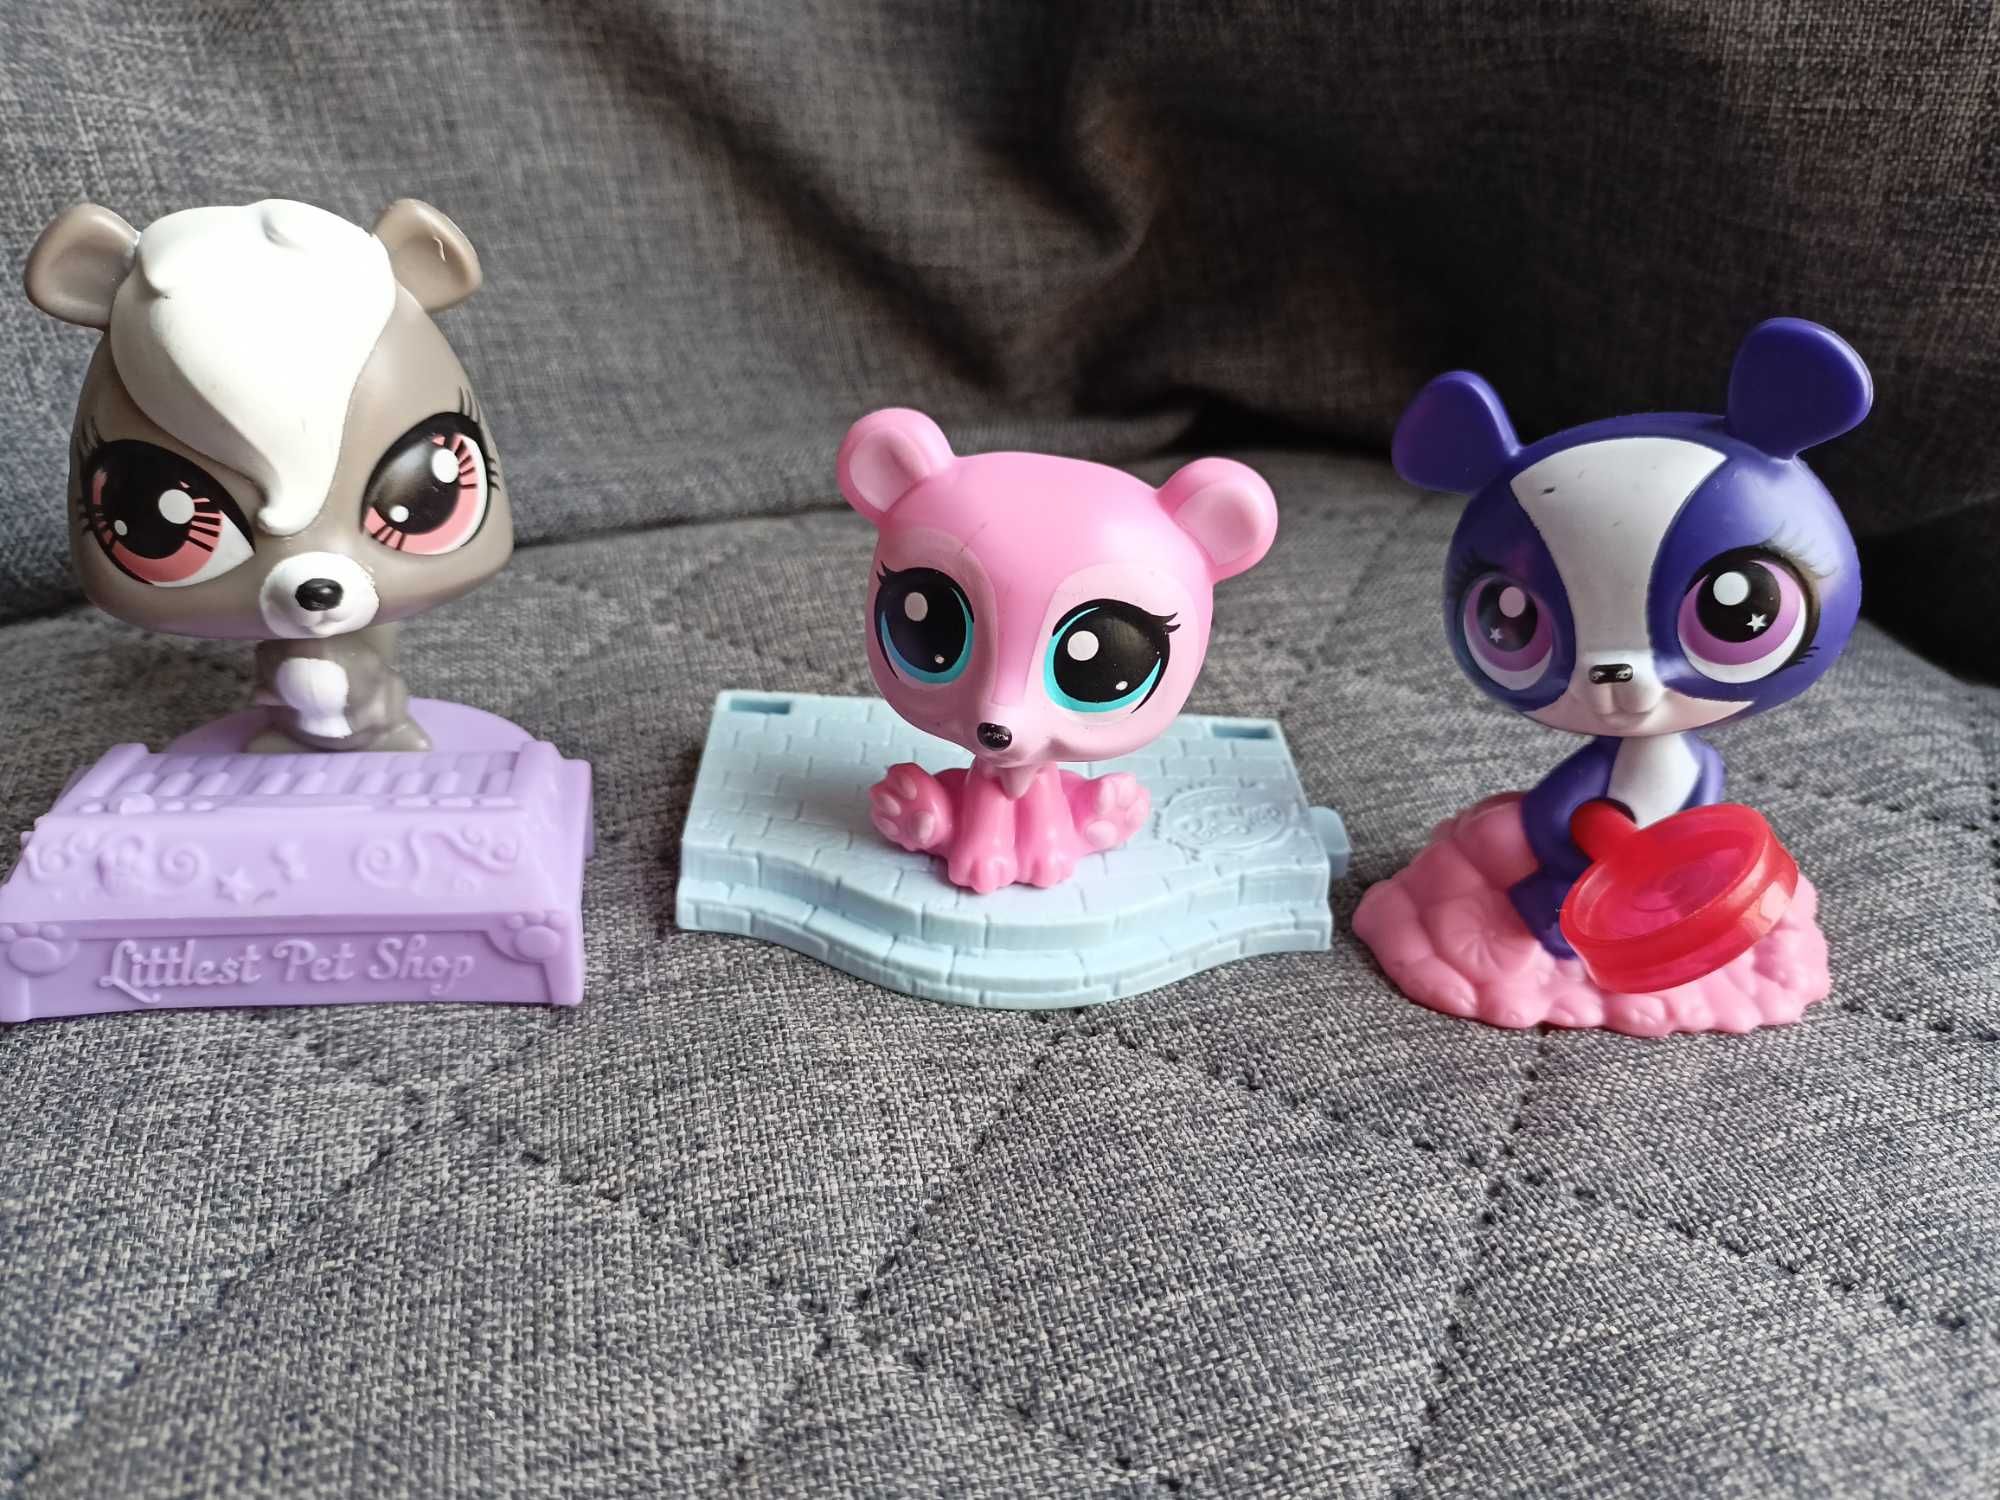 Zestaw zabawki figurki Littlest pet shop Hasbro McDonal'ds 2015 i 2016